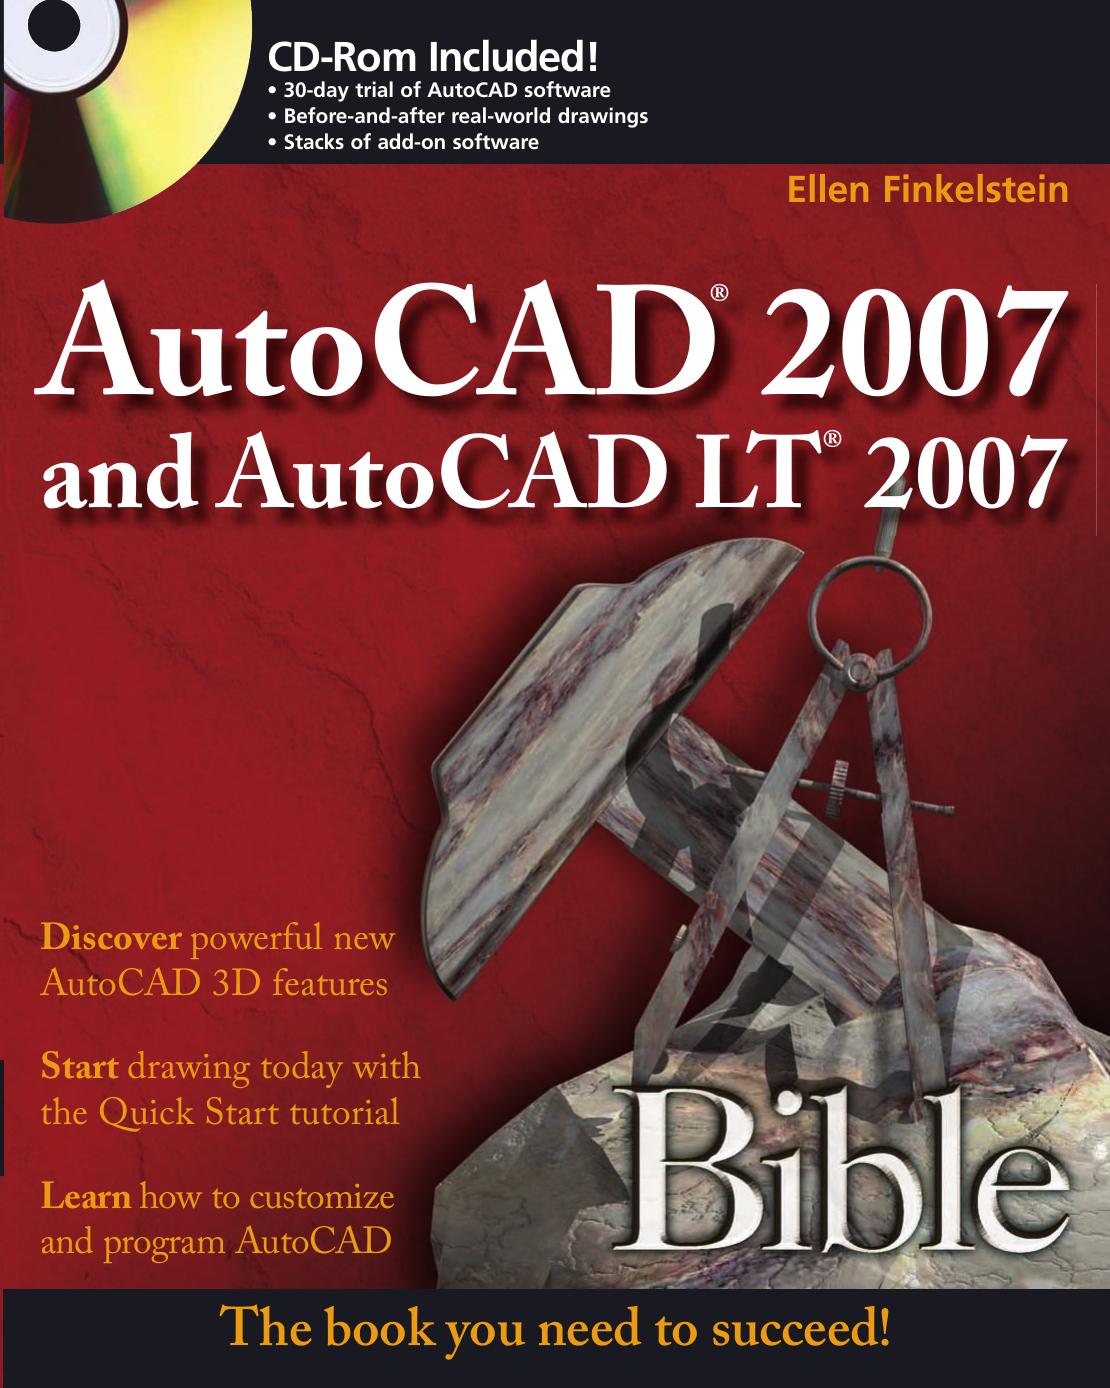 AutoCAD 2007 and AutoCAD LT 2007 Bible